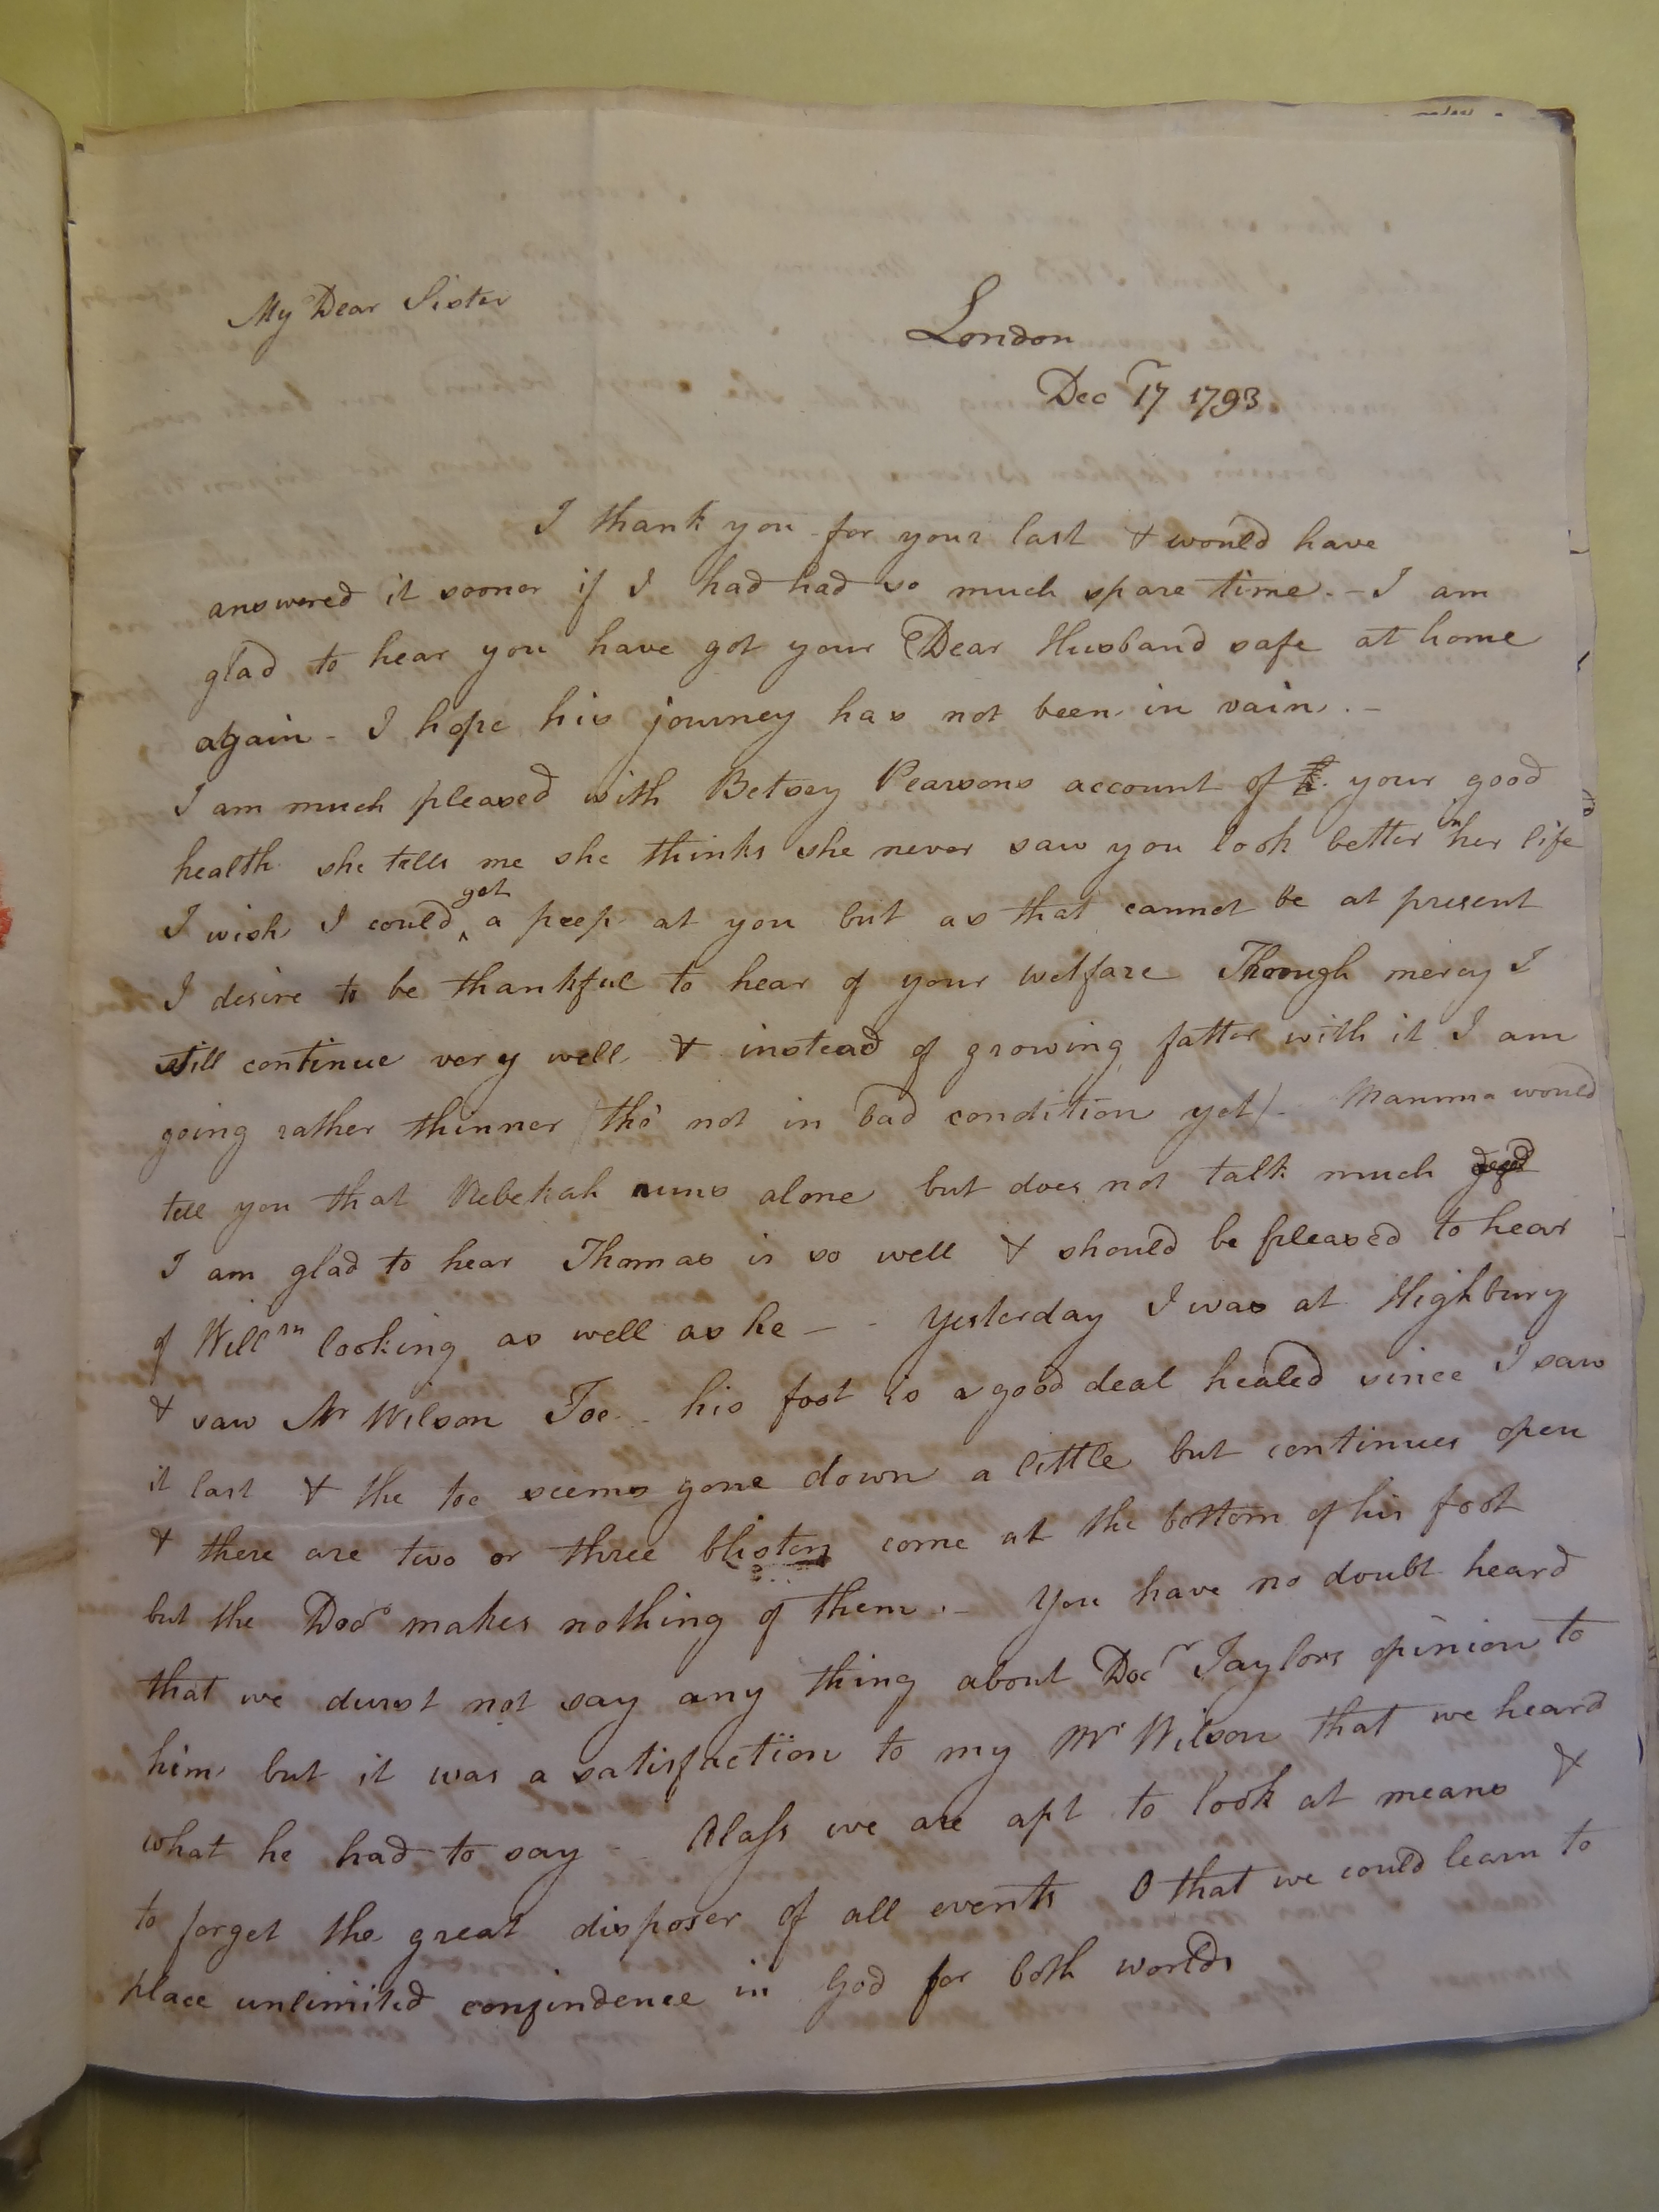 Image #1 of letter: Elizabeth Wilson to Rebekah Bateman, 17 December 1793